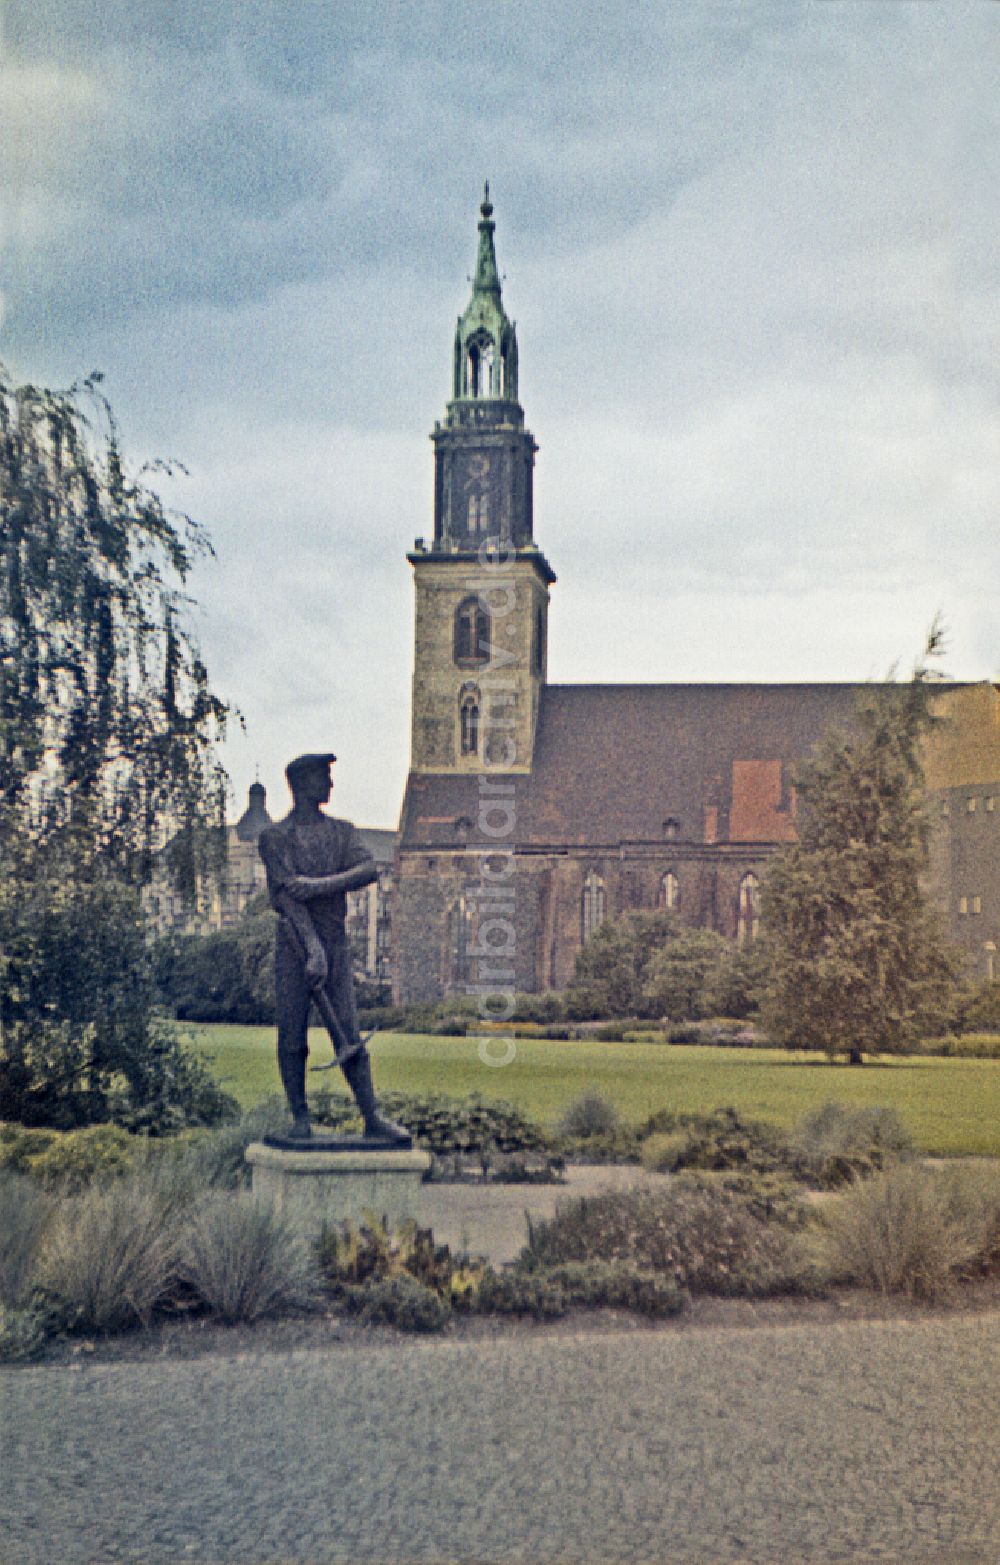 DDR-Bildarchiv: Berlin - Glockenturm der Kirche St. Marienkirche in Berlin in der DDR